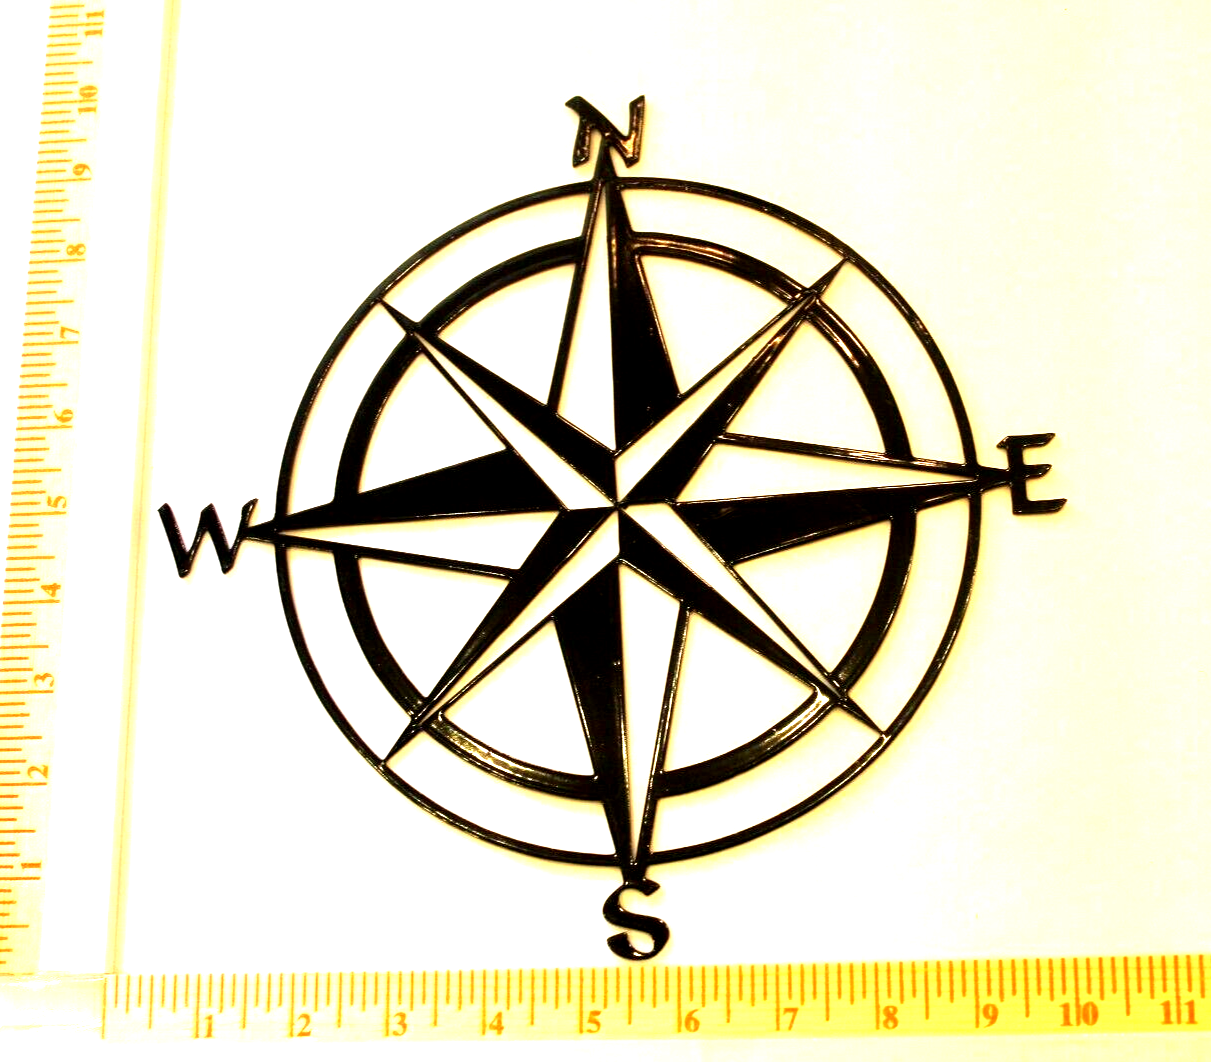 *NEW* Shabby Chic 14 ga. Thick Nautical Star Metal Compass Wall Hanging Art 10”